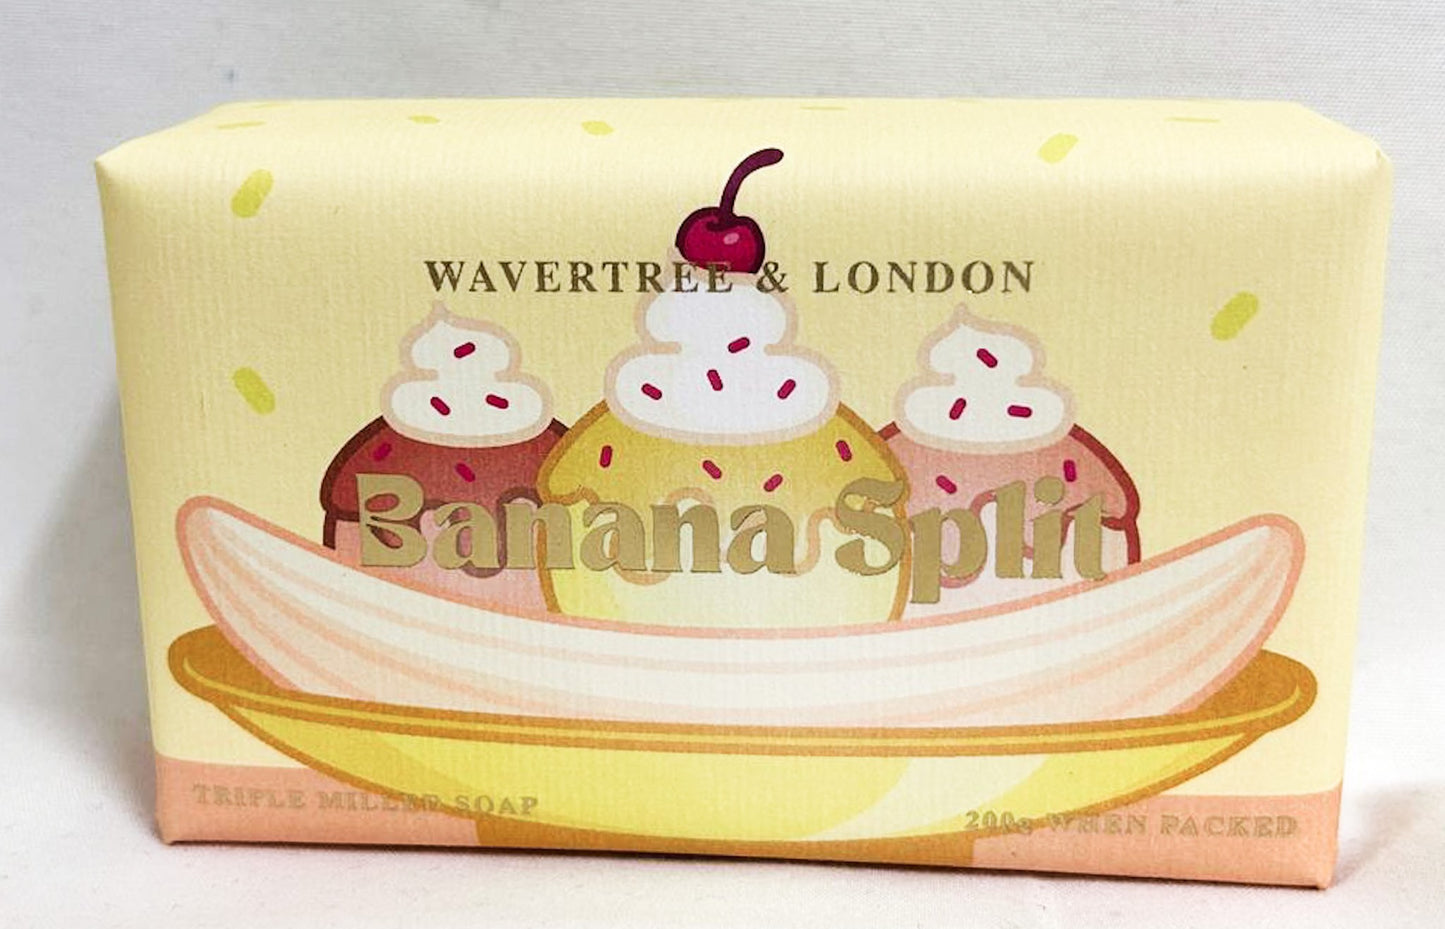 Wavertree & London "Banana Split" Soap